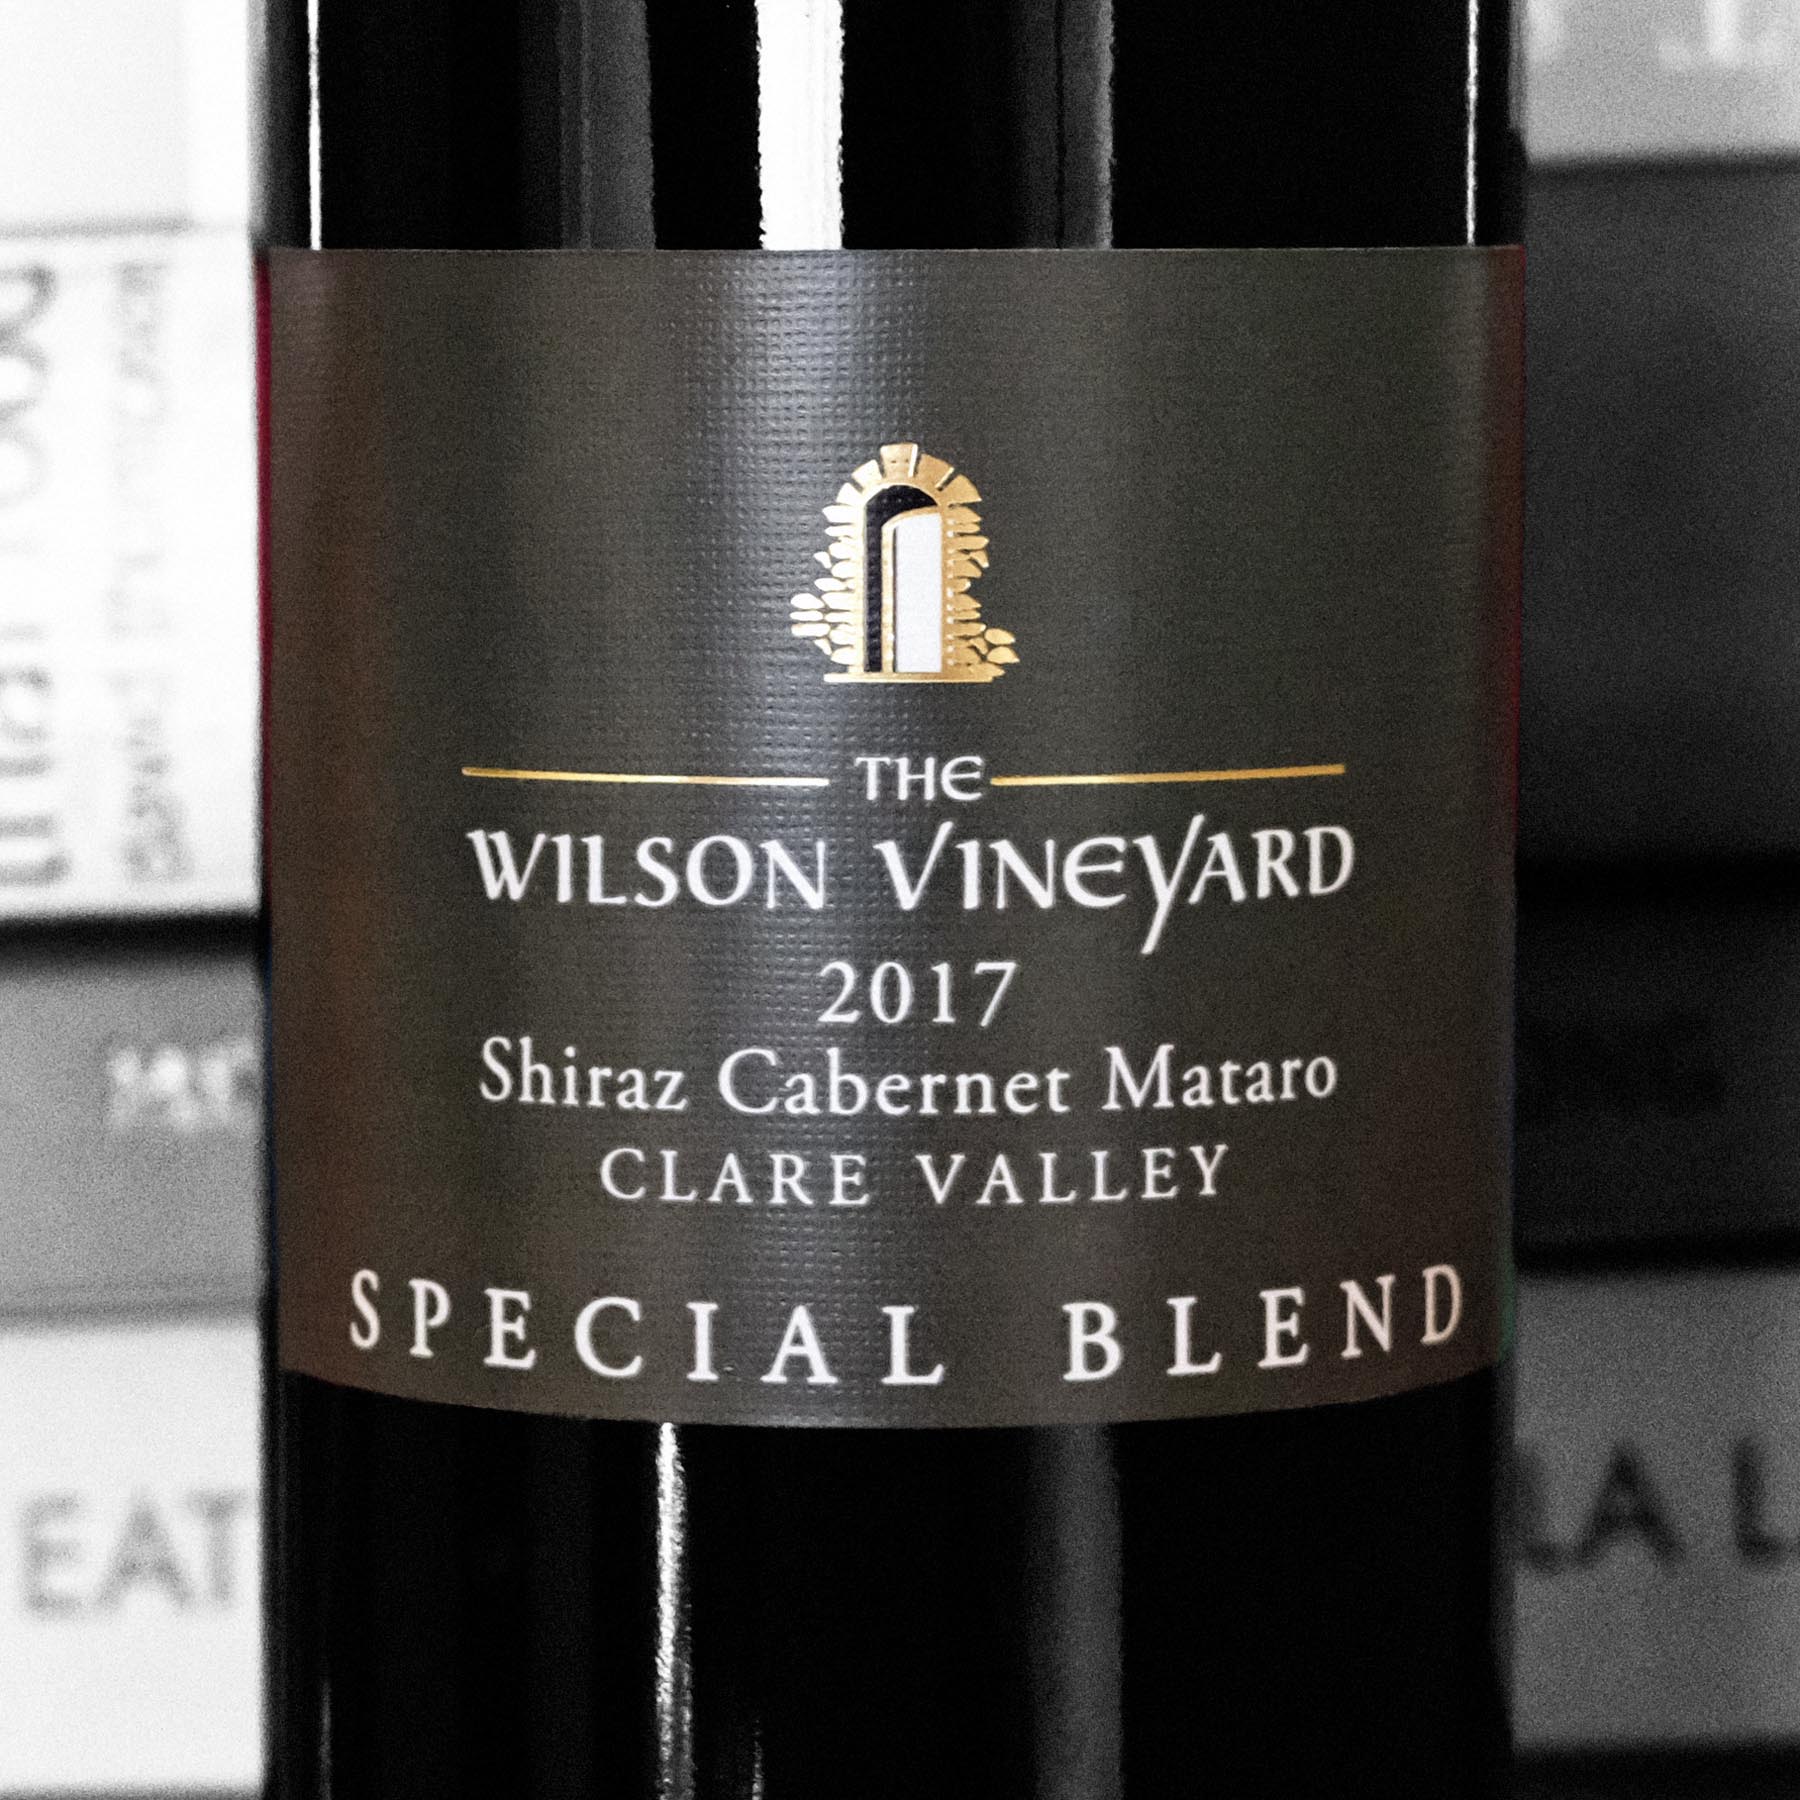 The Wilson Vineyard Special Blend Shiraz Cabernet Mataro 2017